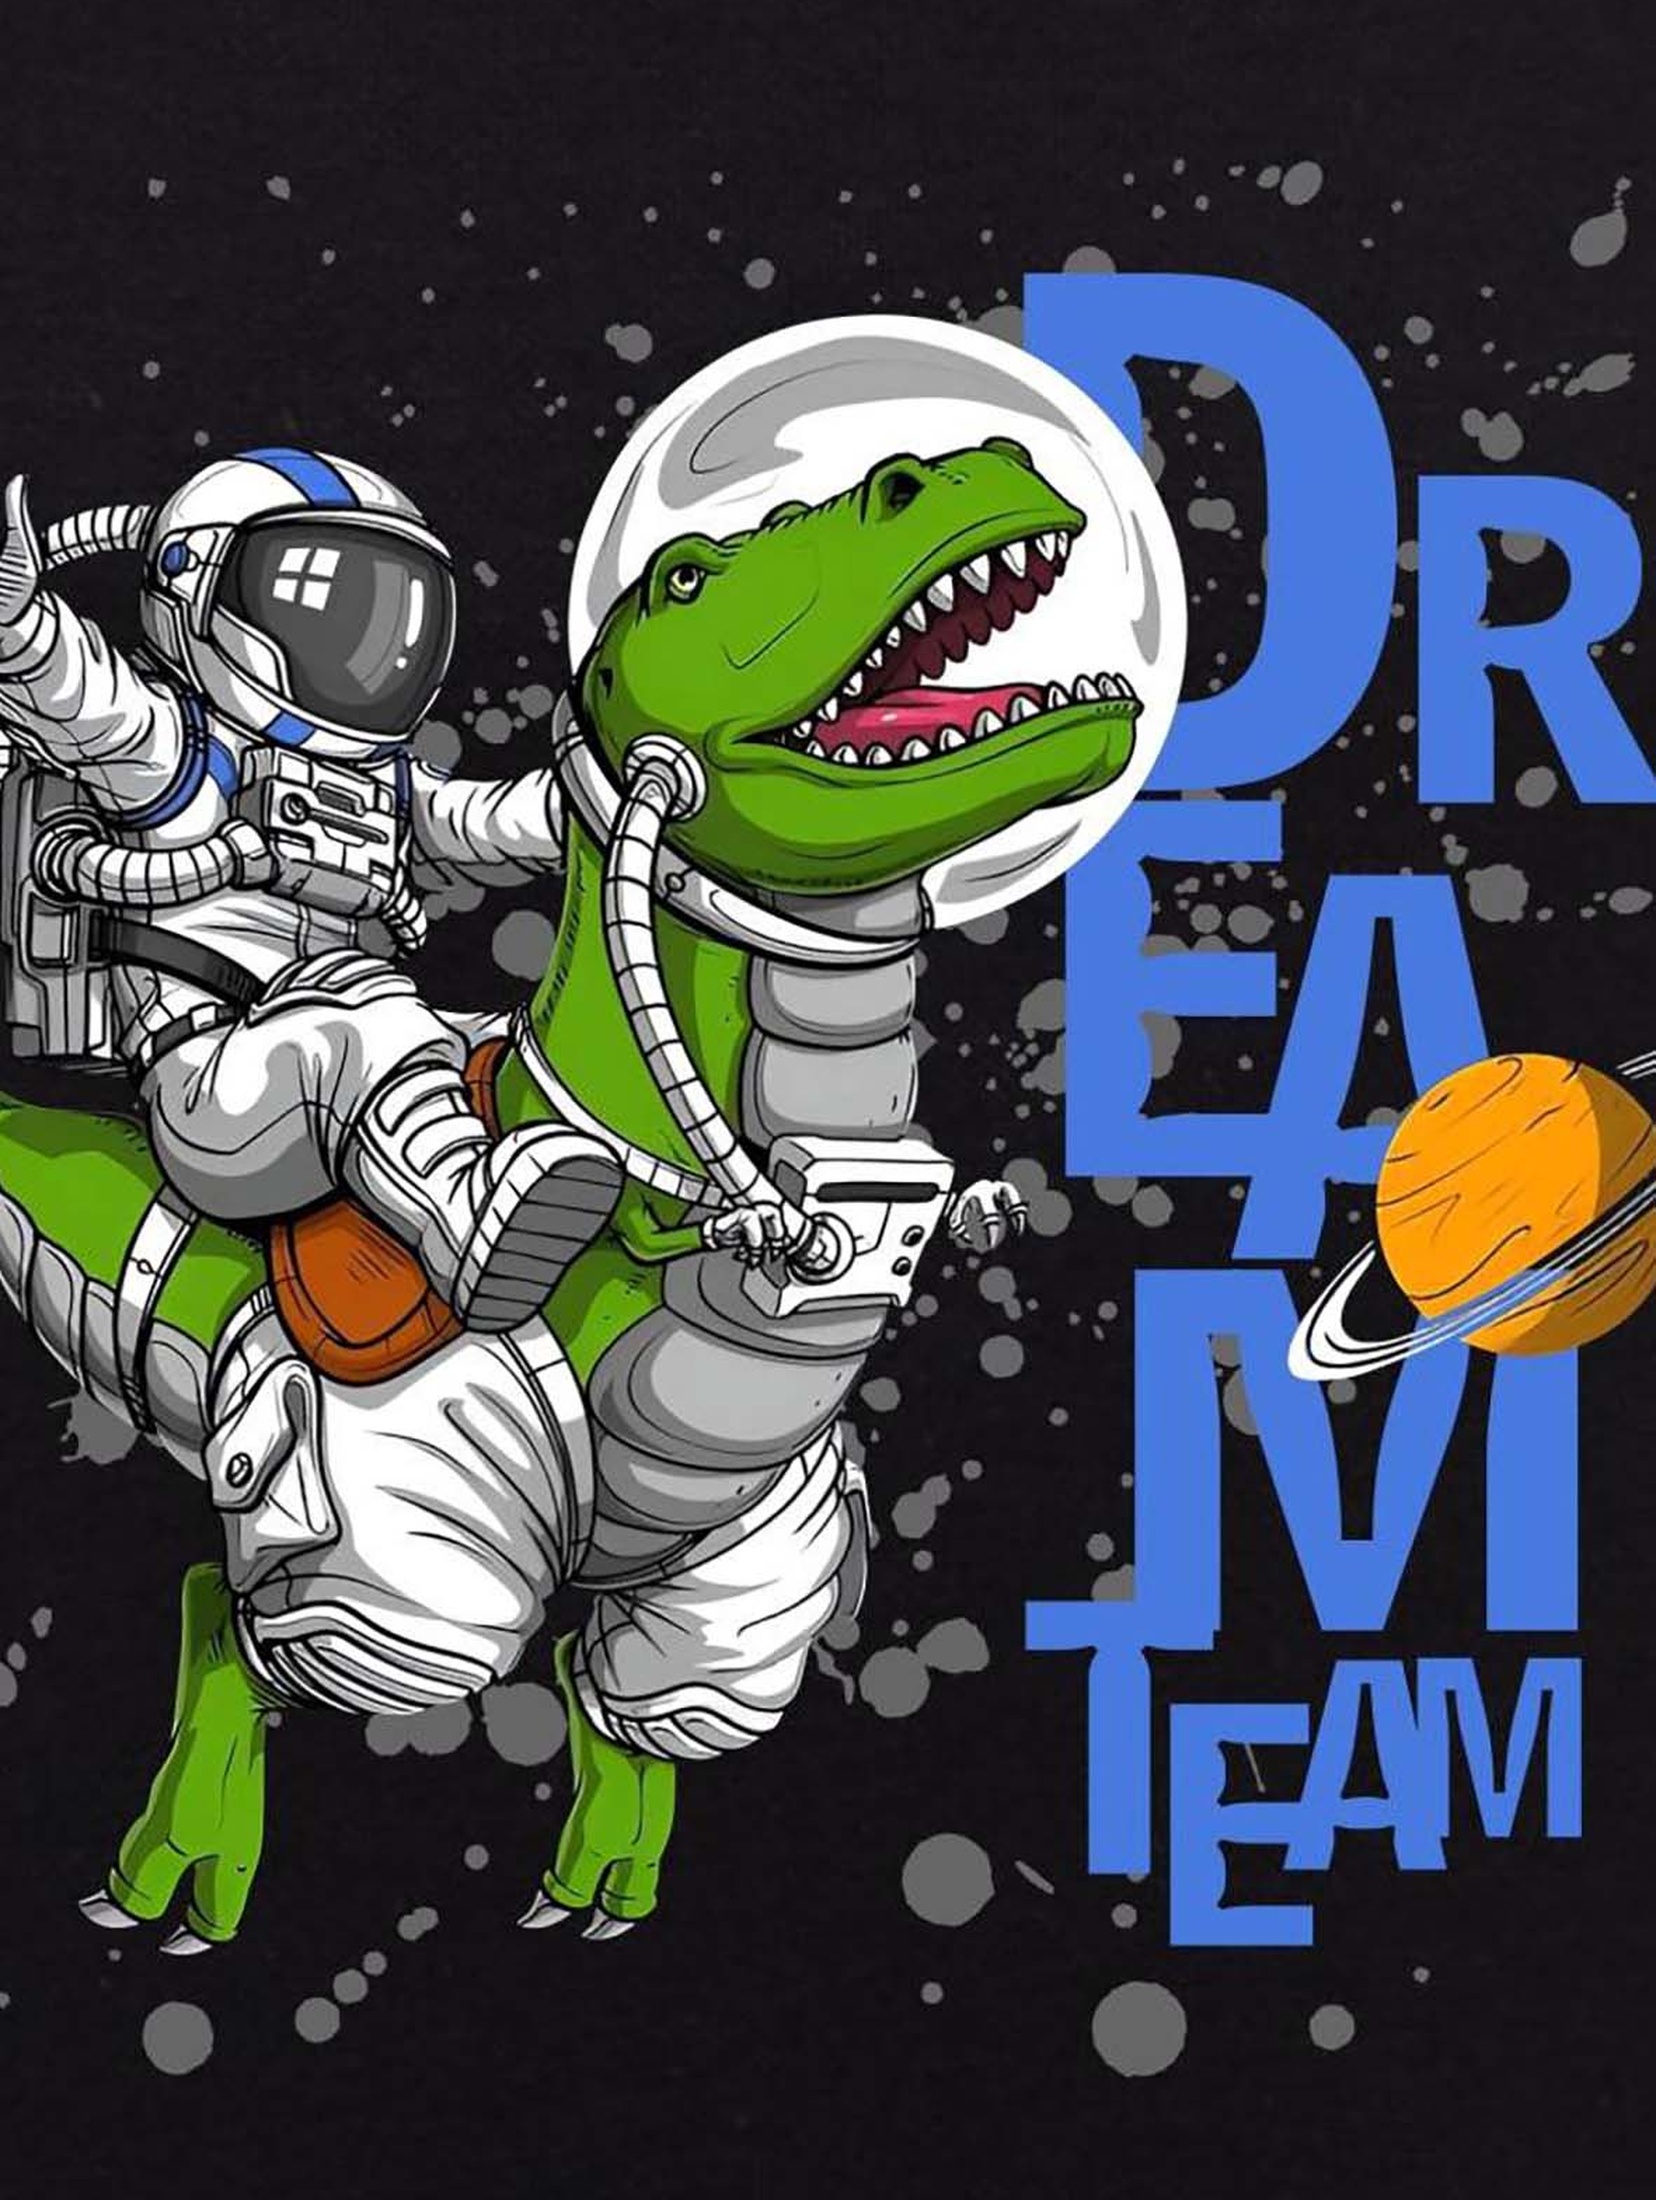 Dzianinowa bluza nierozpinana Astronauta & Dinozaur czarna